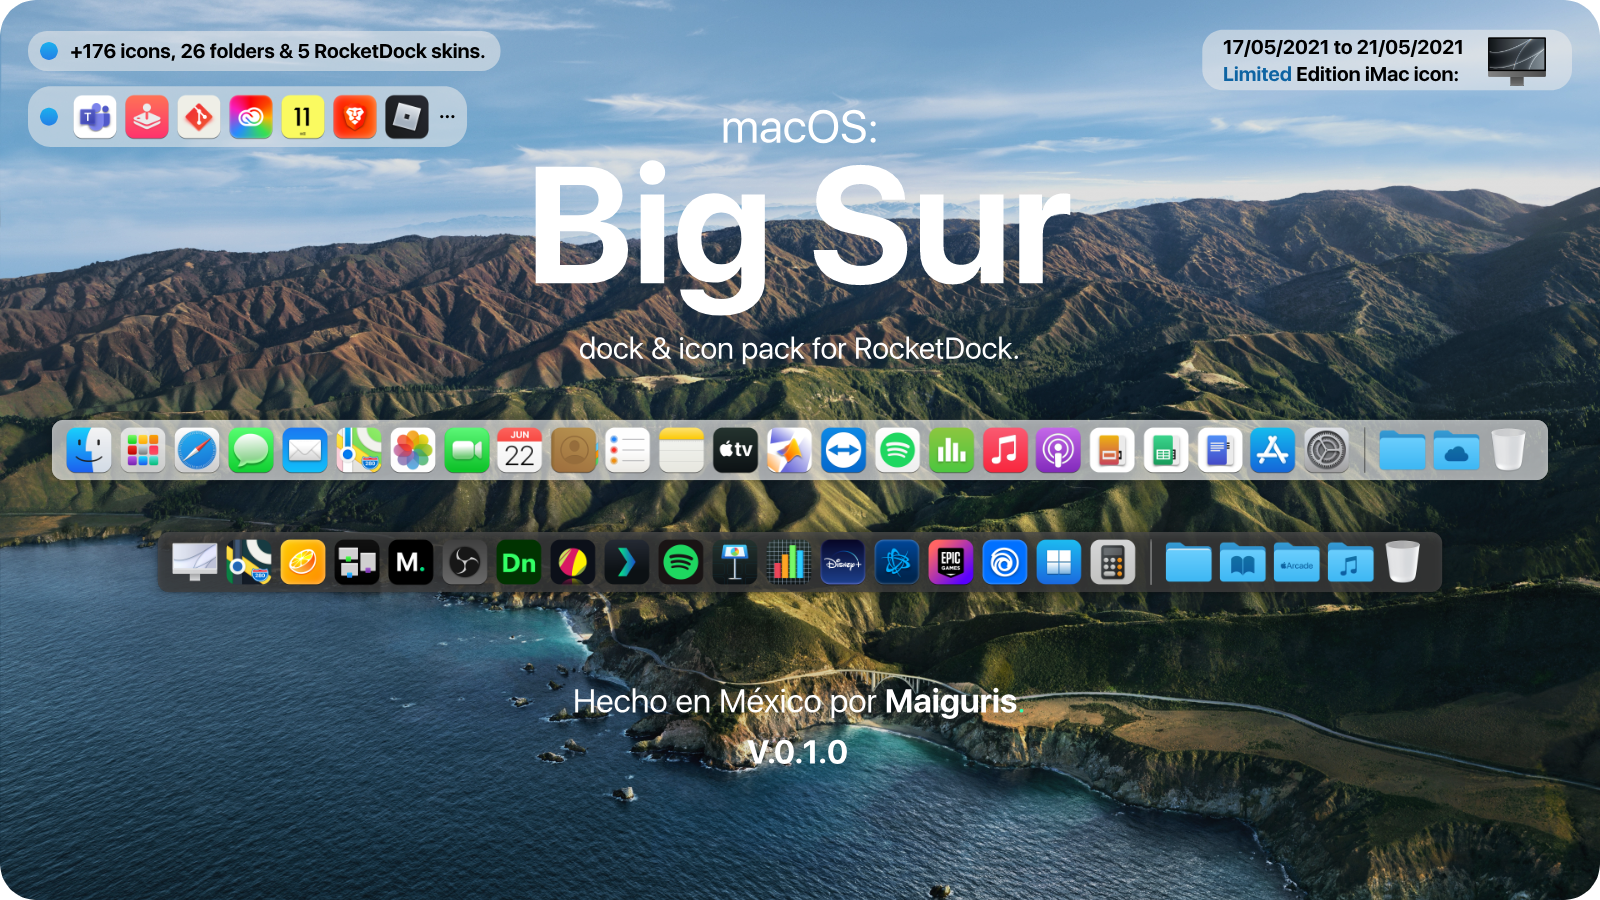 macOS BigSur For RocketDock. by Maiguris on DeviantArt